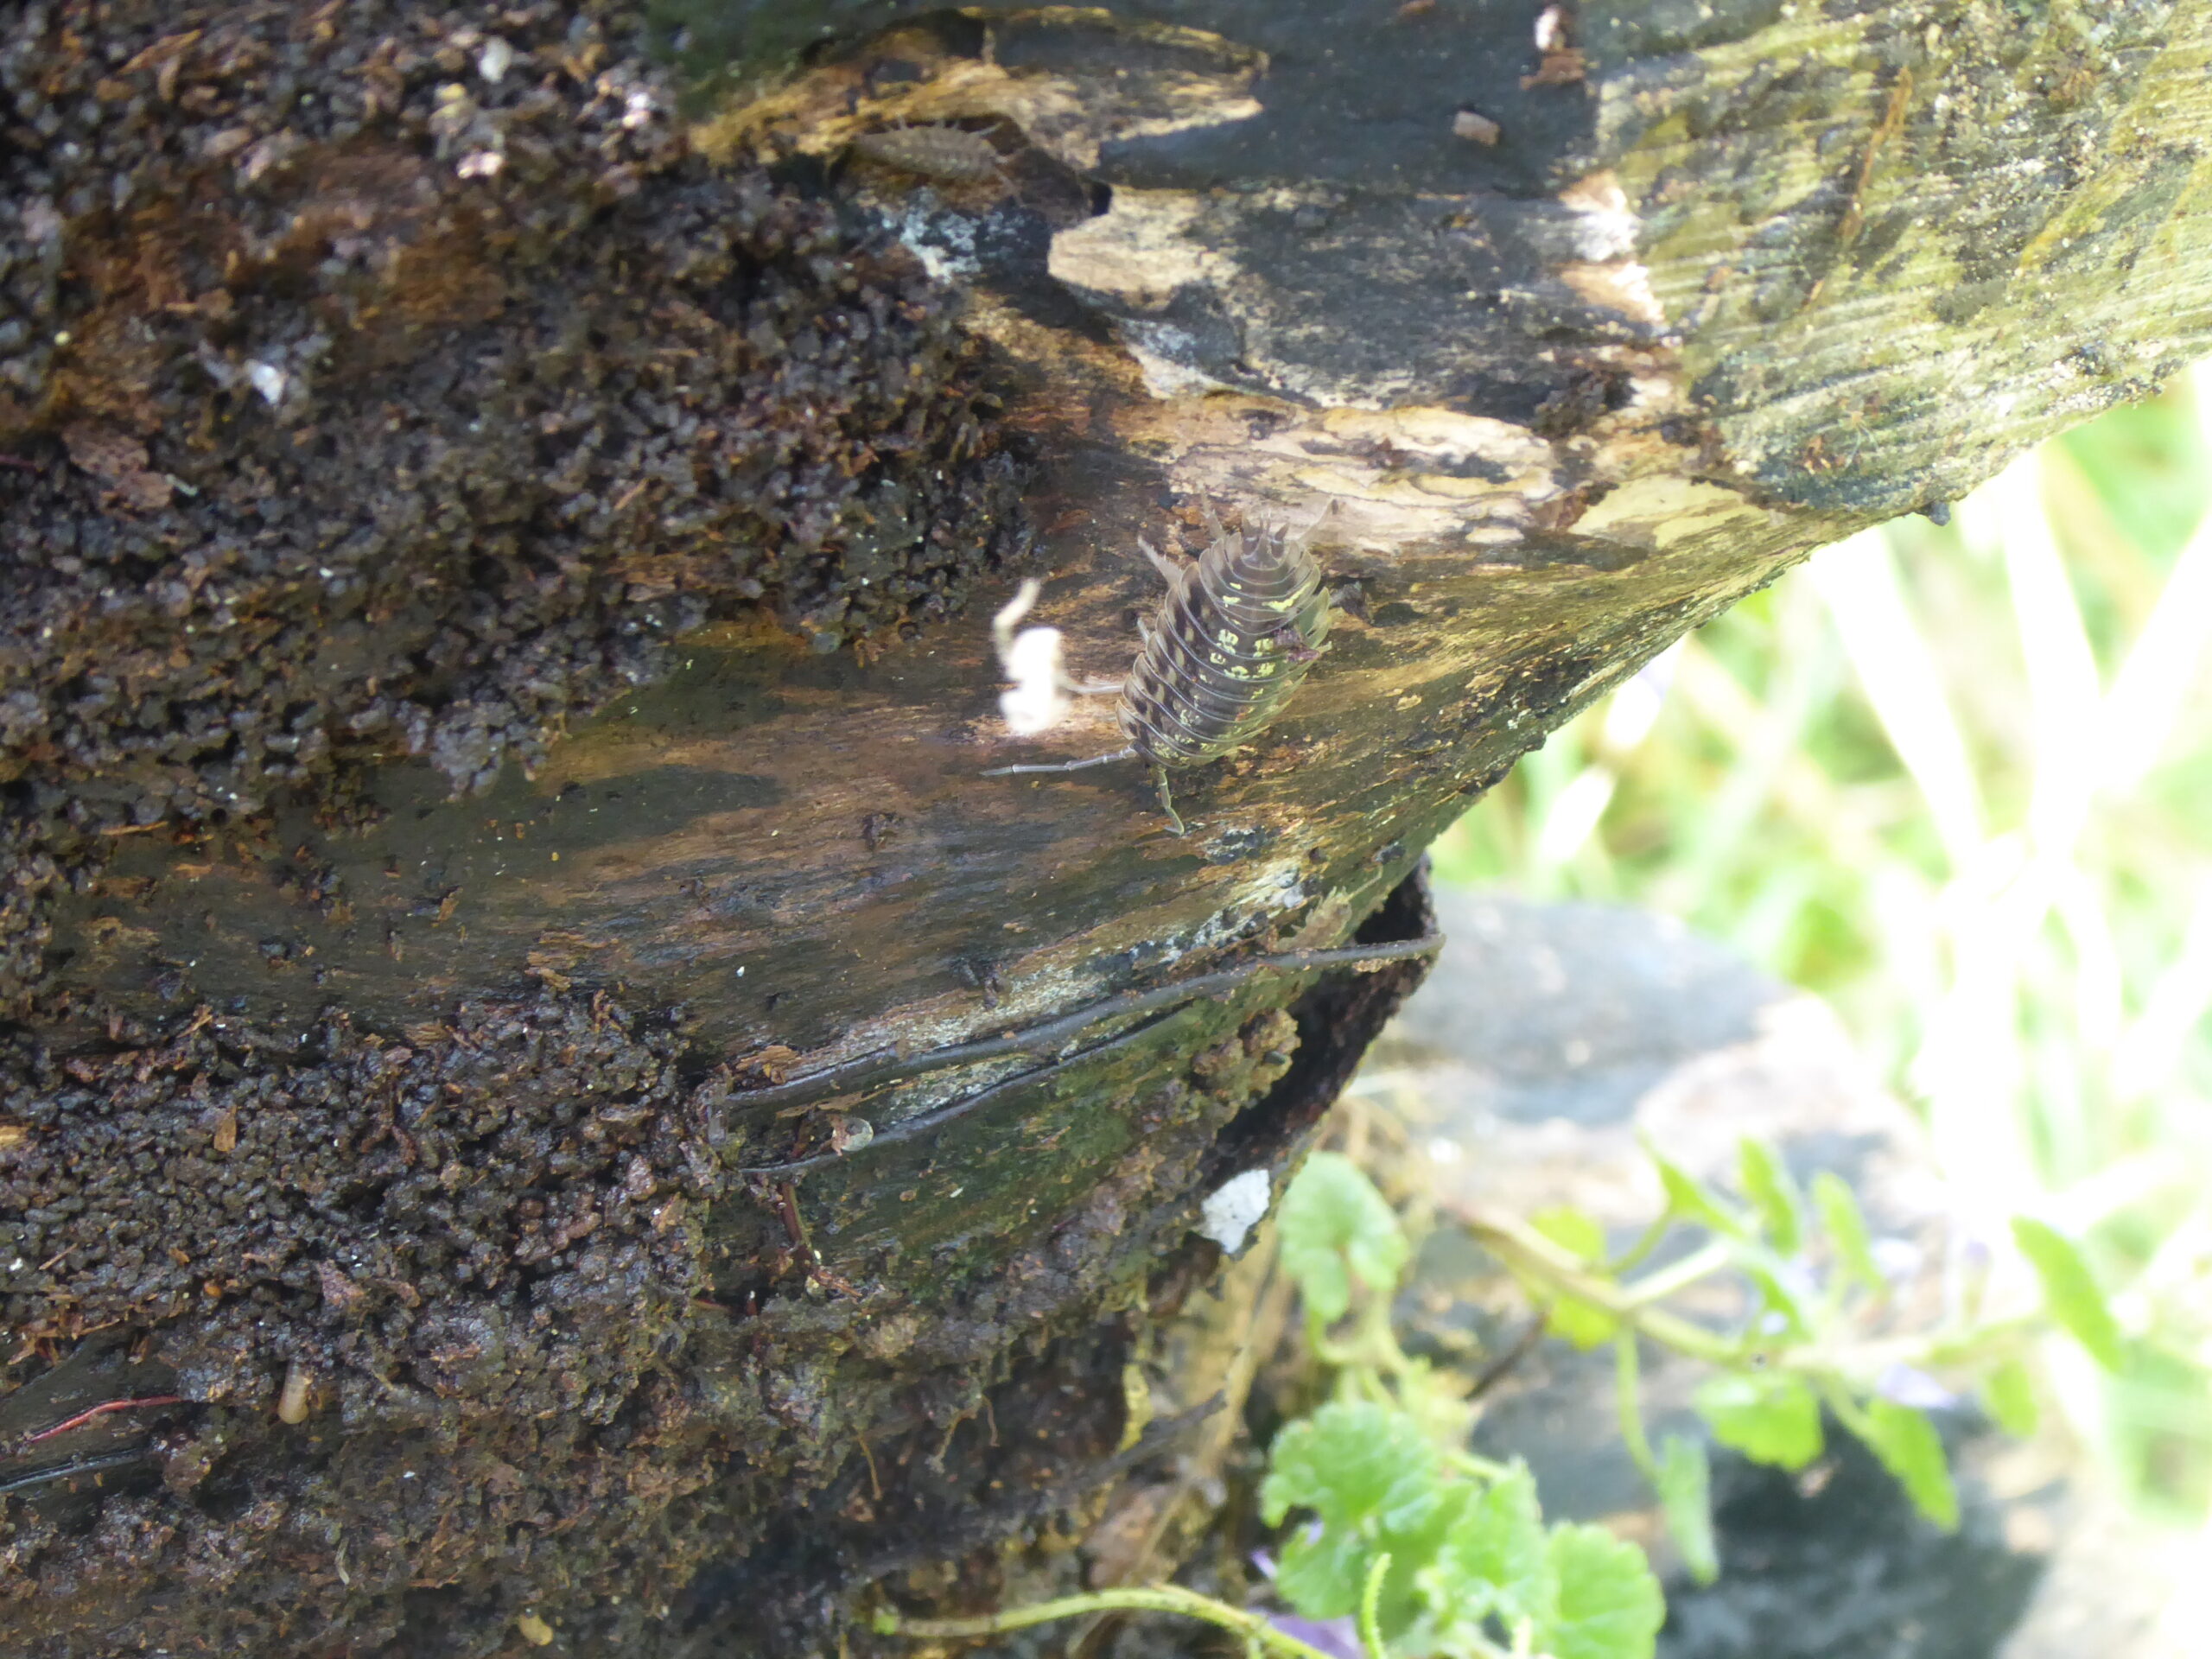 Common Shiny Woodlouse  (Oniscus asellus)